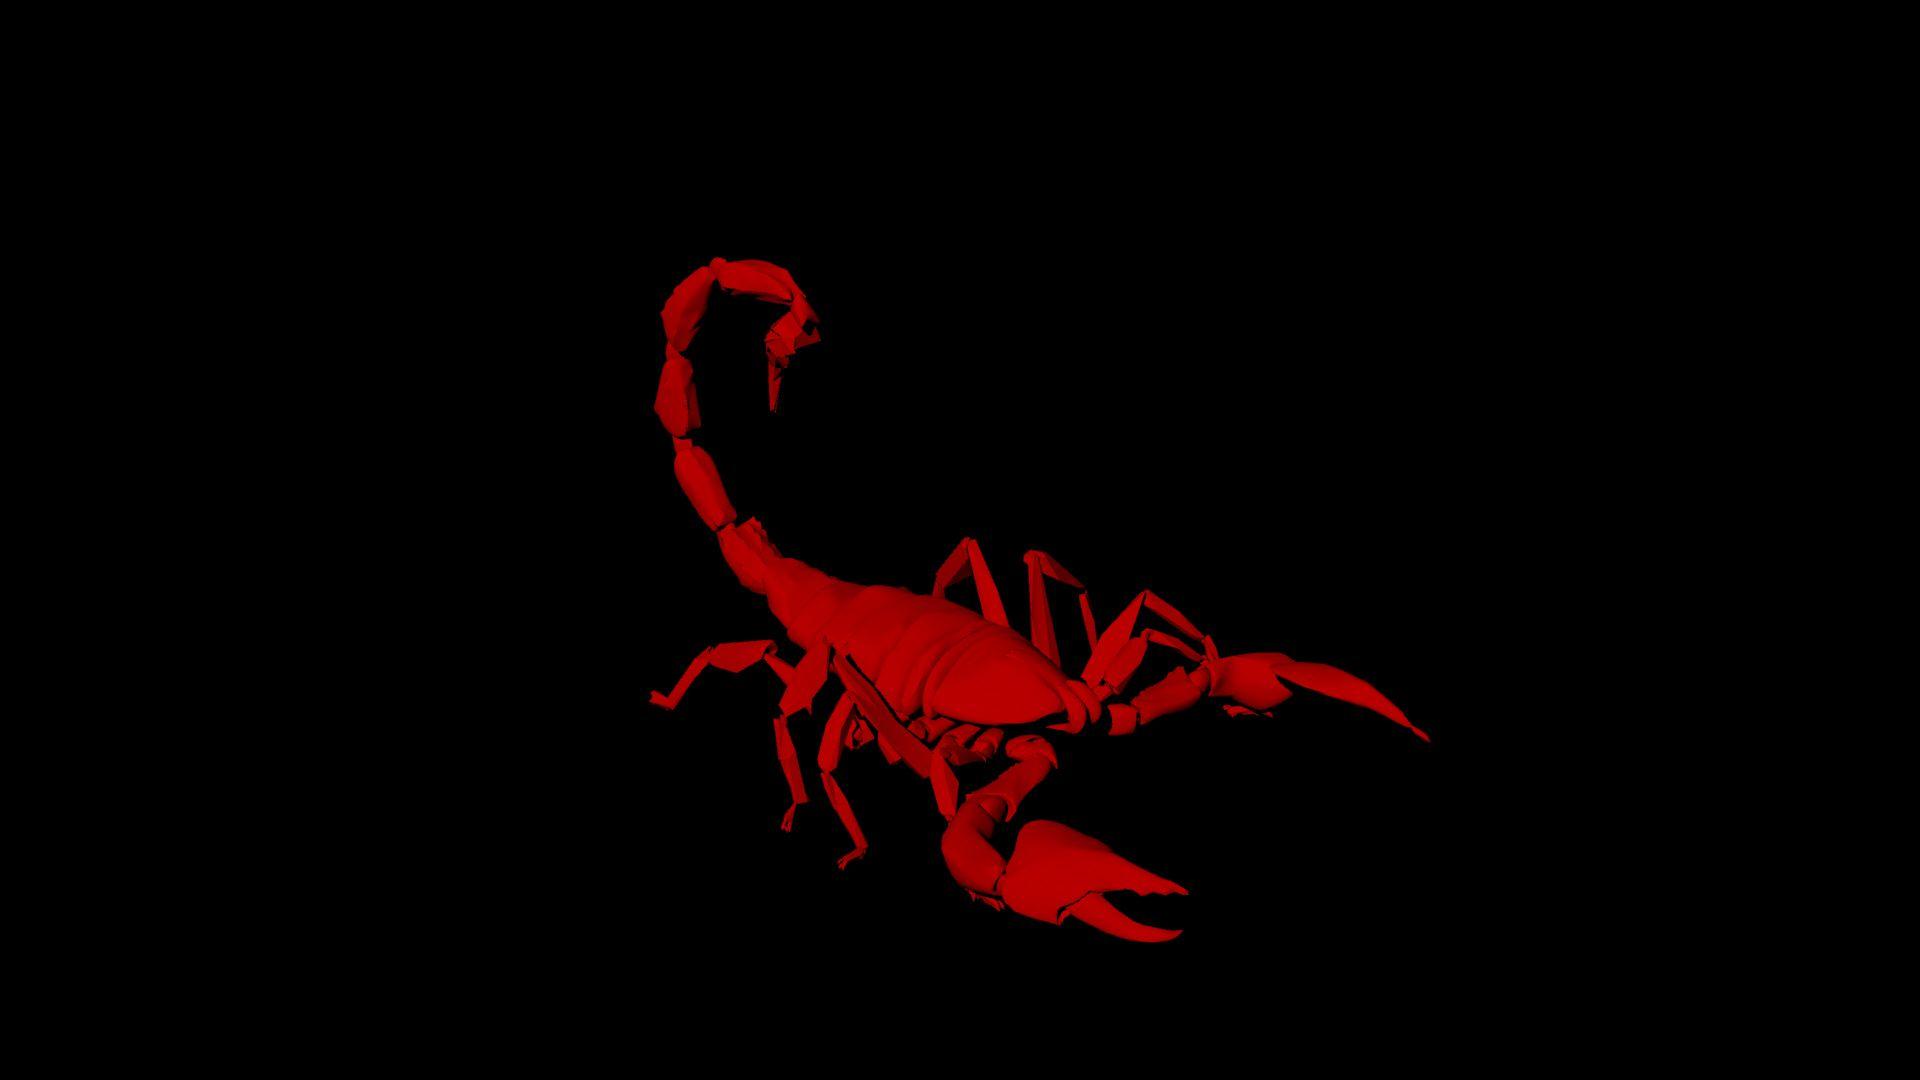 Scorpion Wallpaper HD. (37++ Wallpaper)